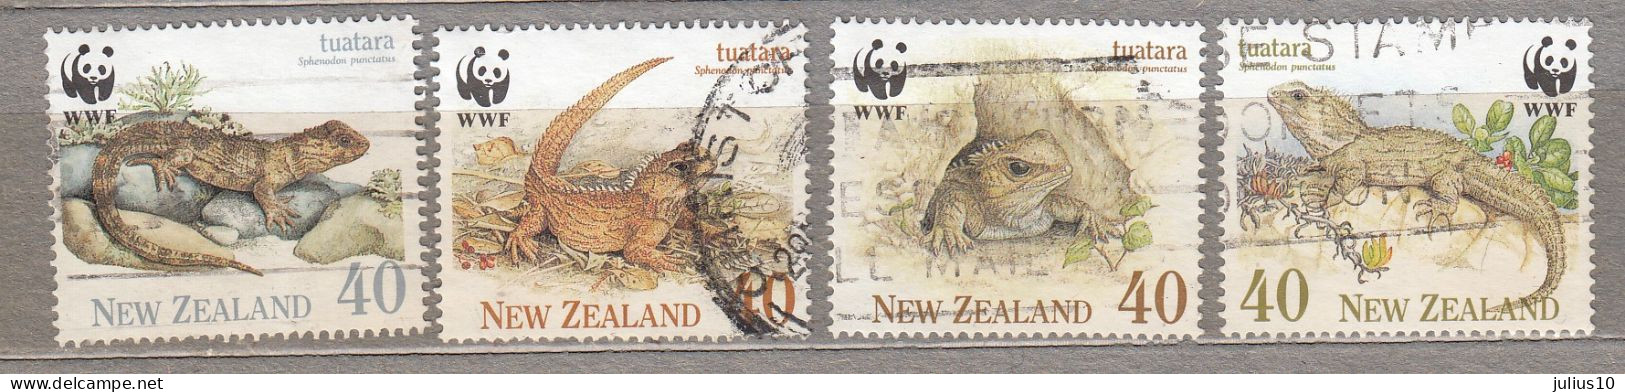 NEW ZEALAND 1991 WWF Reptiles Used(o) Mi 1160-1163   #34168 - Usados